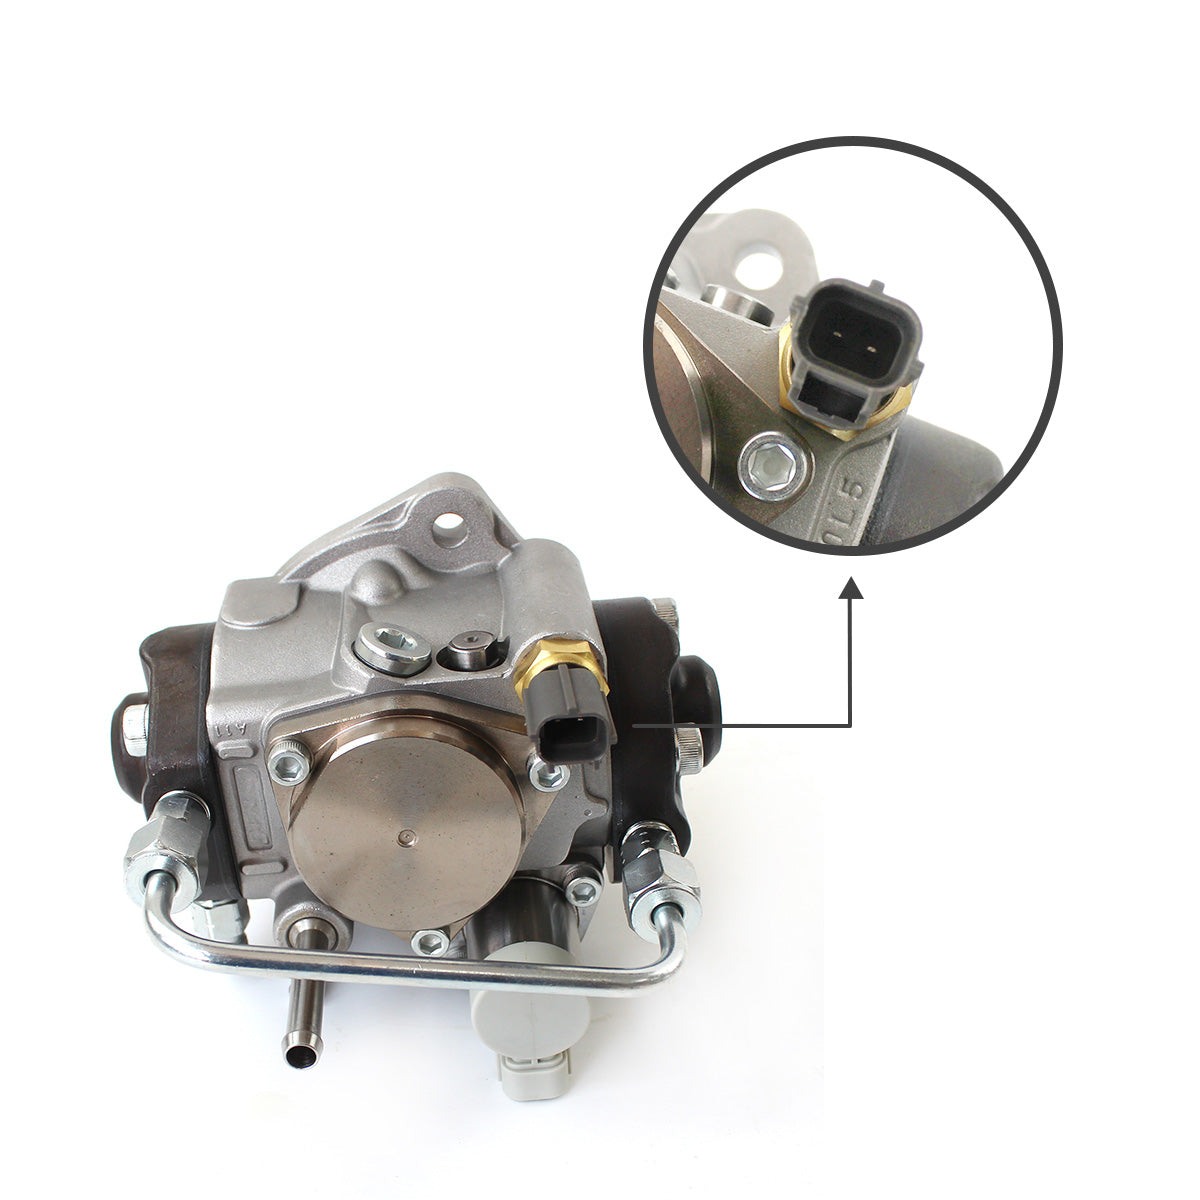 294000-2330 1460A095 Fuel Pump for Denso HP13 Mitsubishi 4N15 Engine L200 - Sinocmp